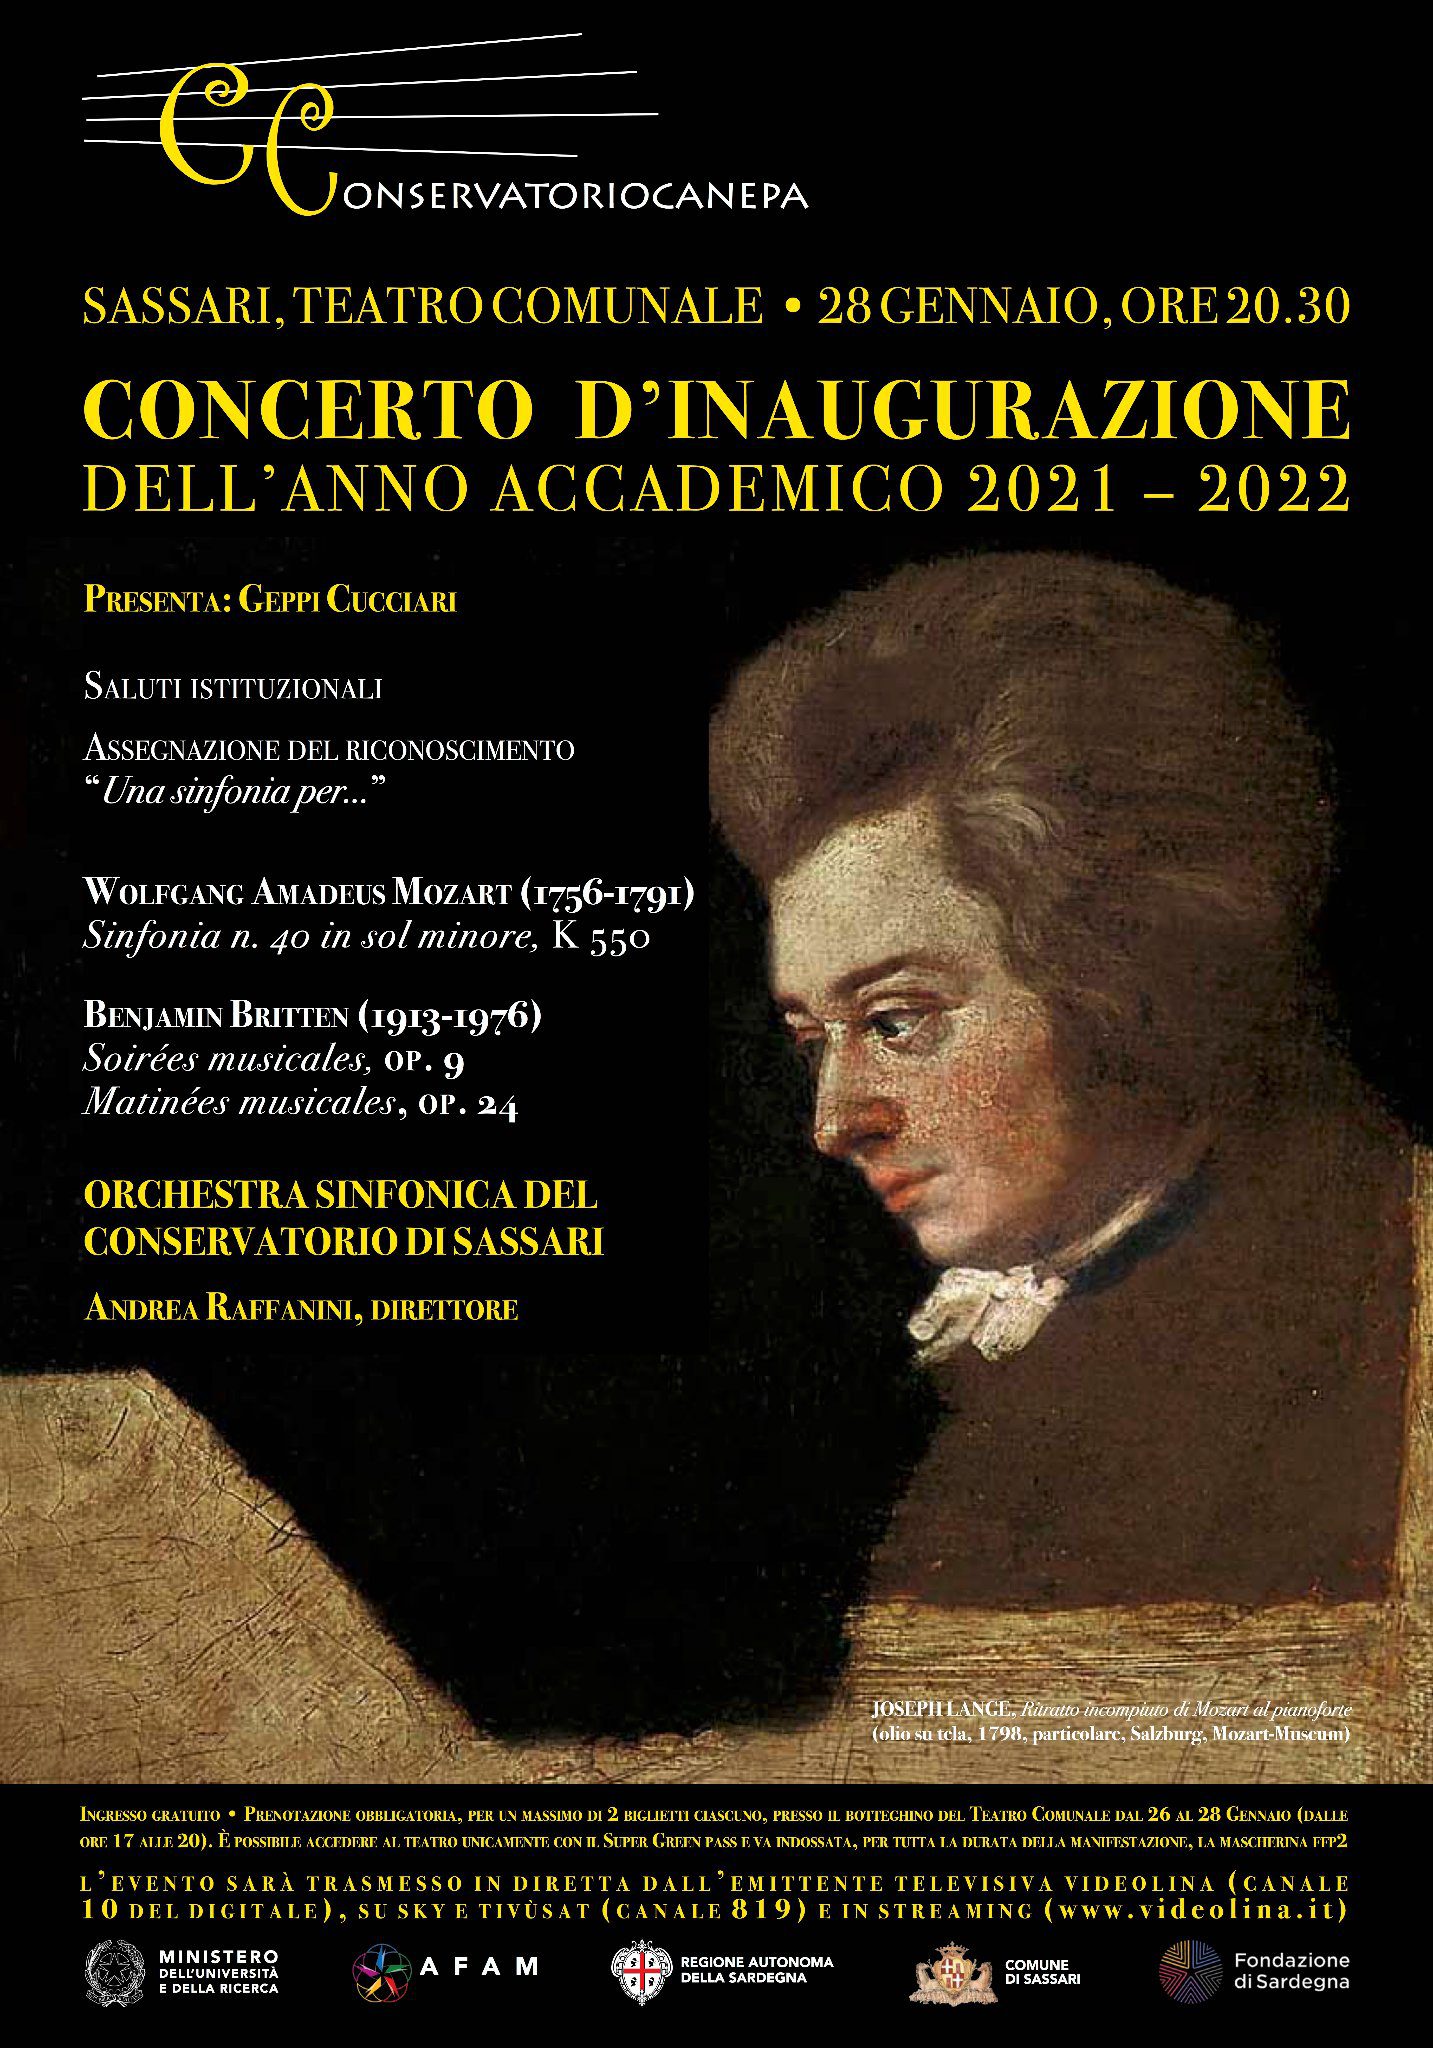 Orchestra Sinfonica del Canepa / Conservatorio Luigi Canepa